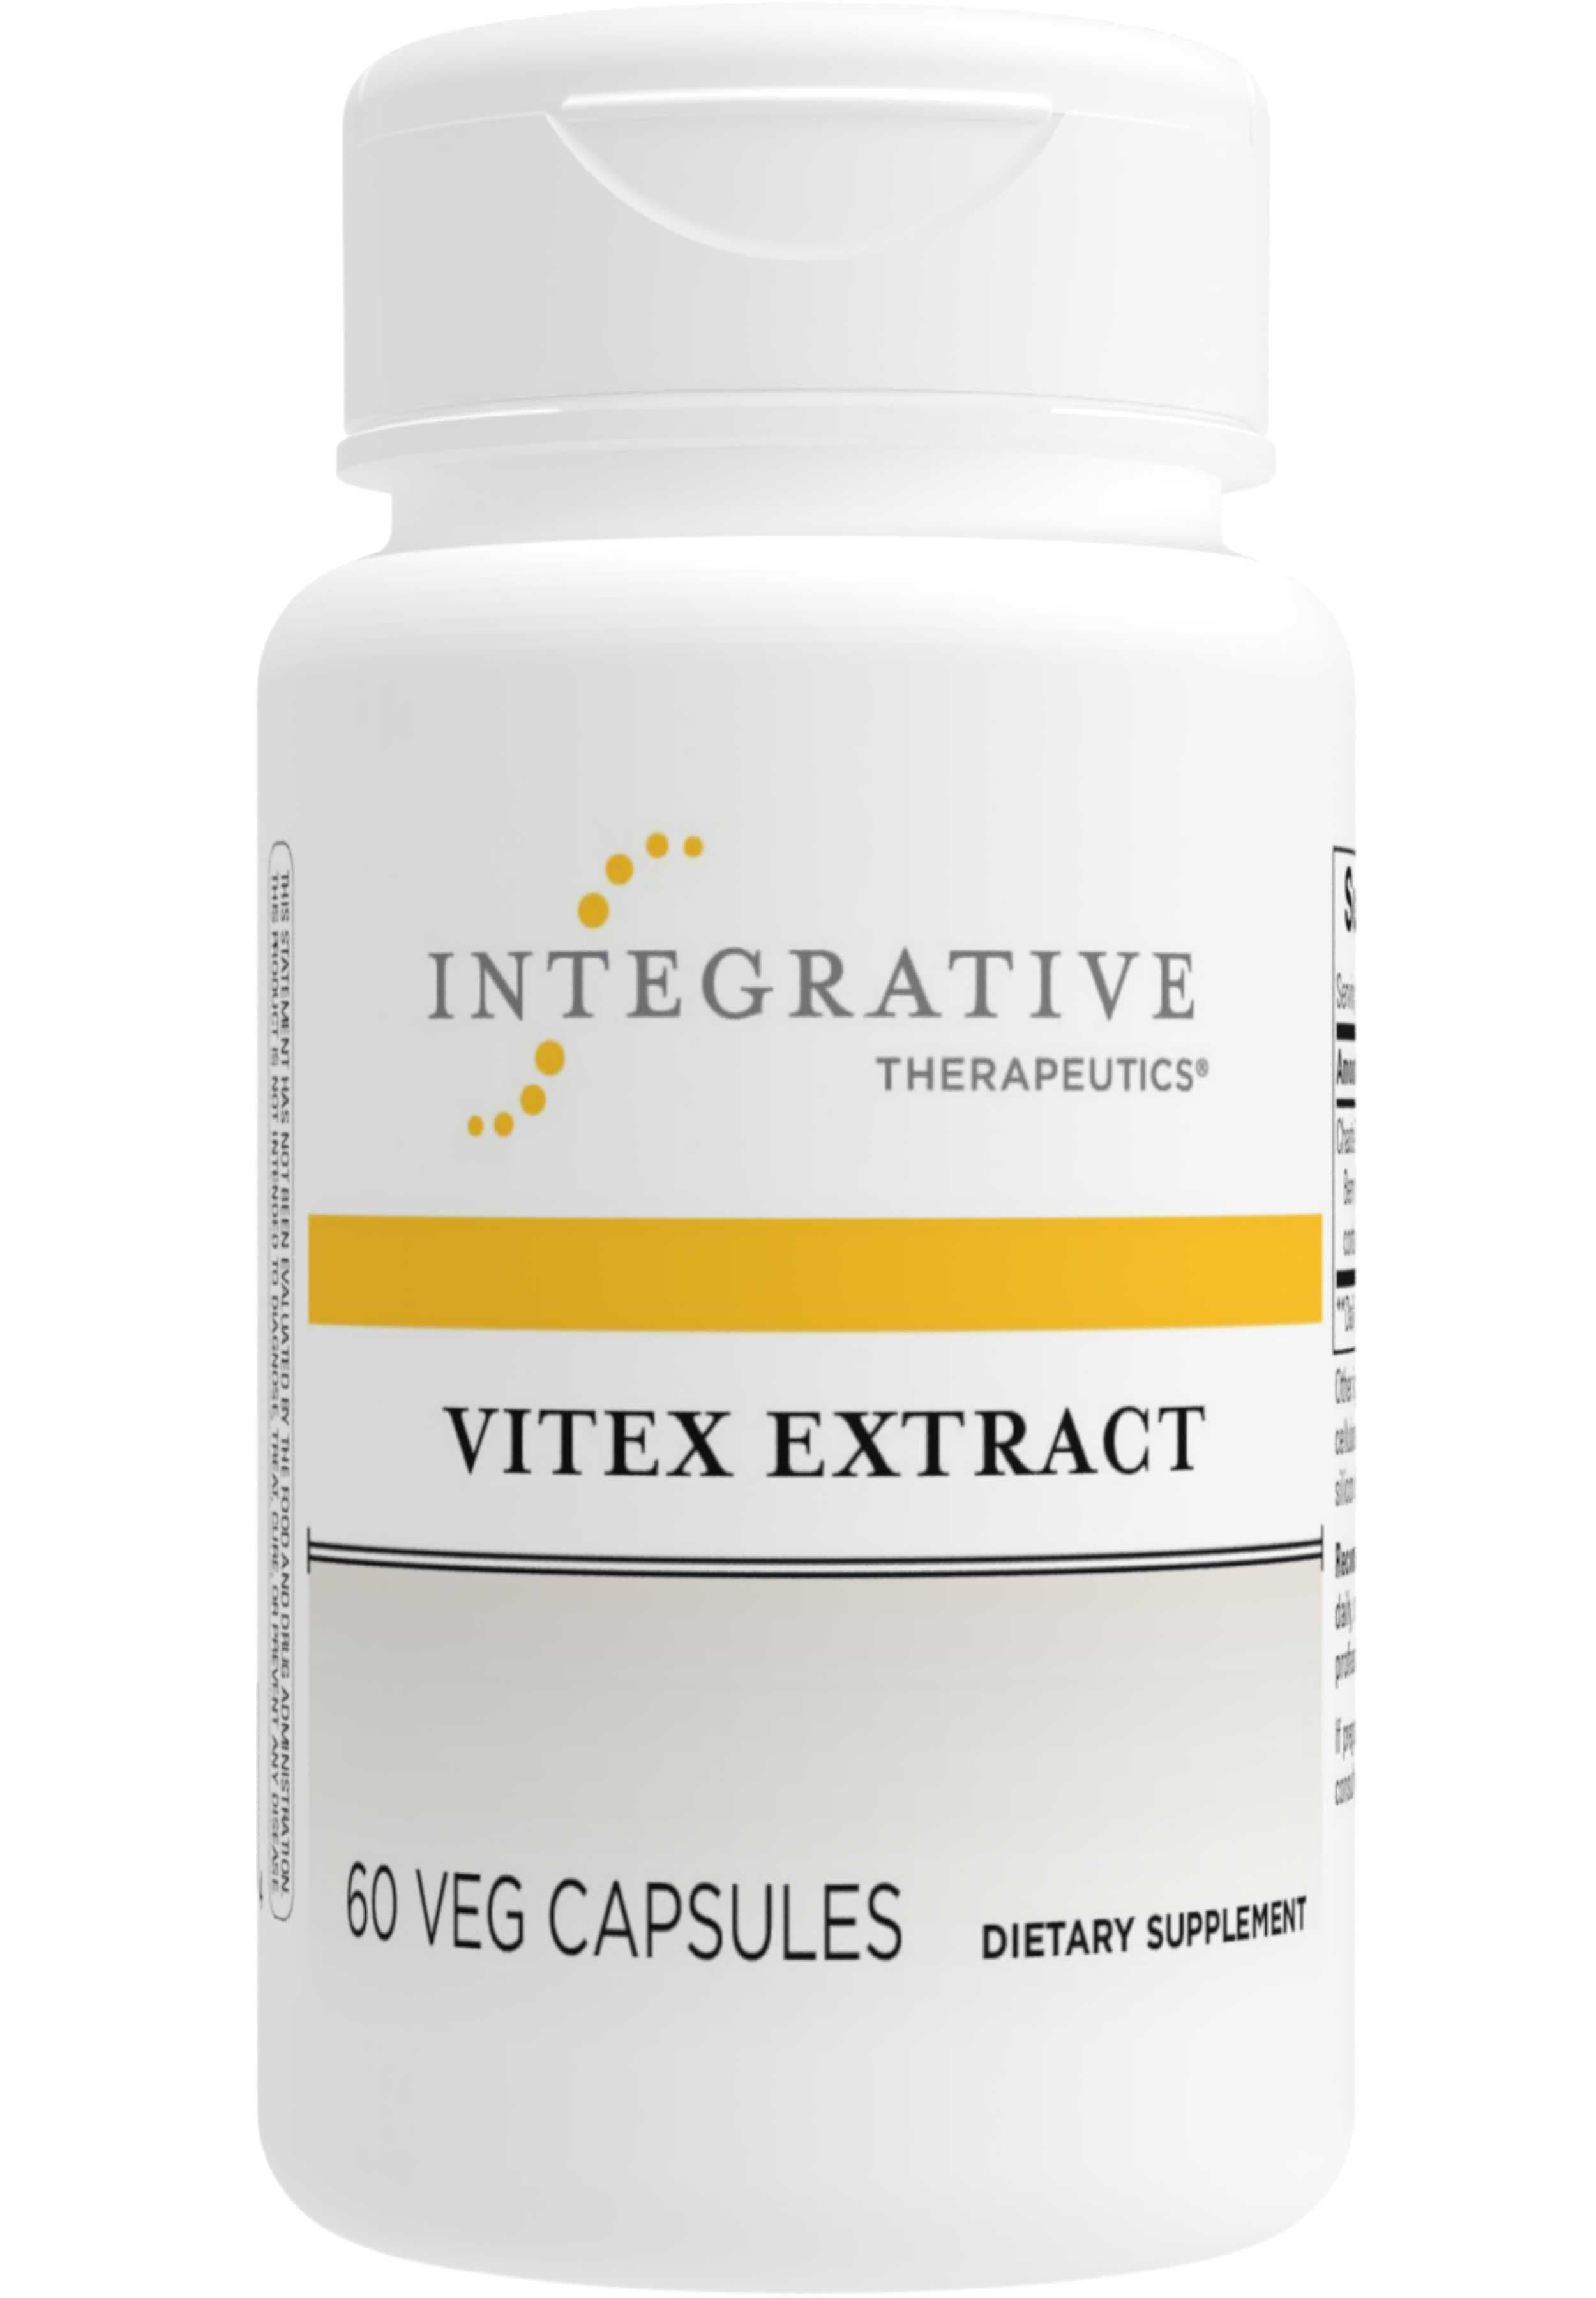 Integrative Therapeutics Vitex Extract